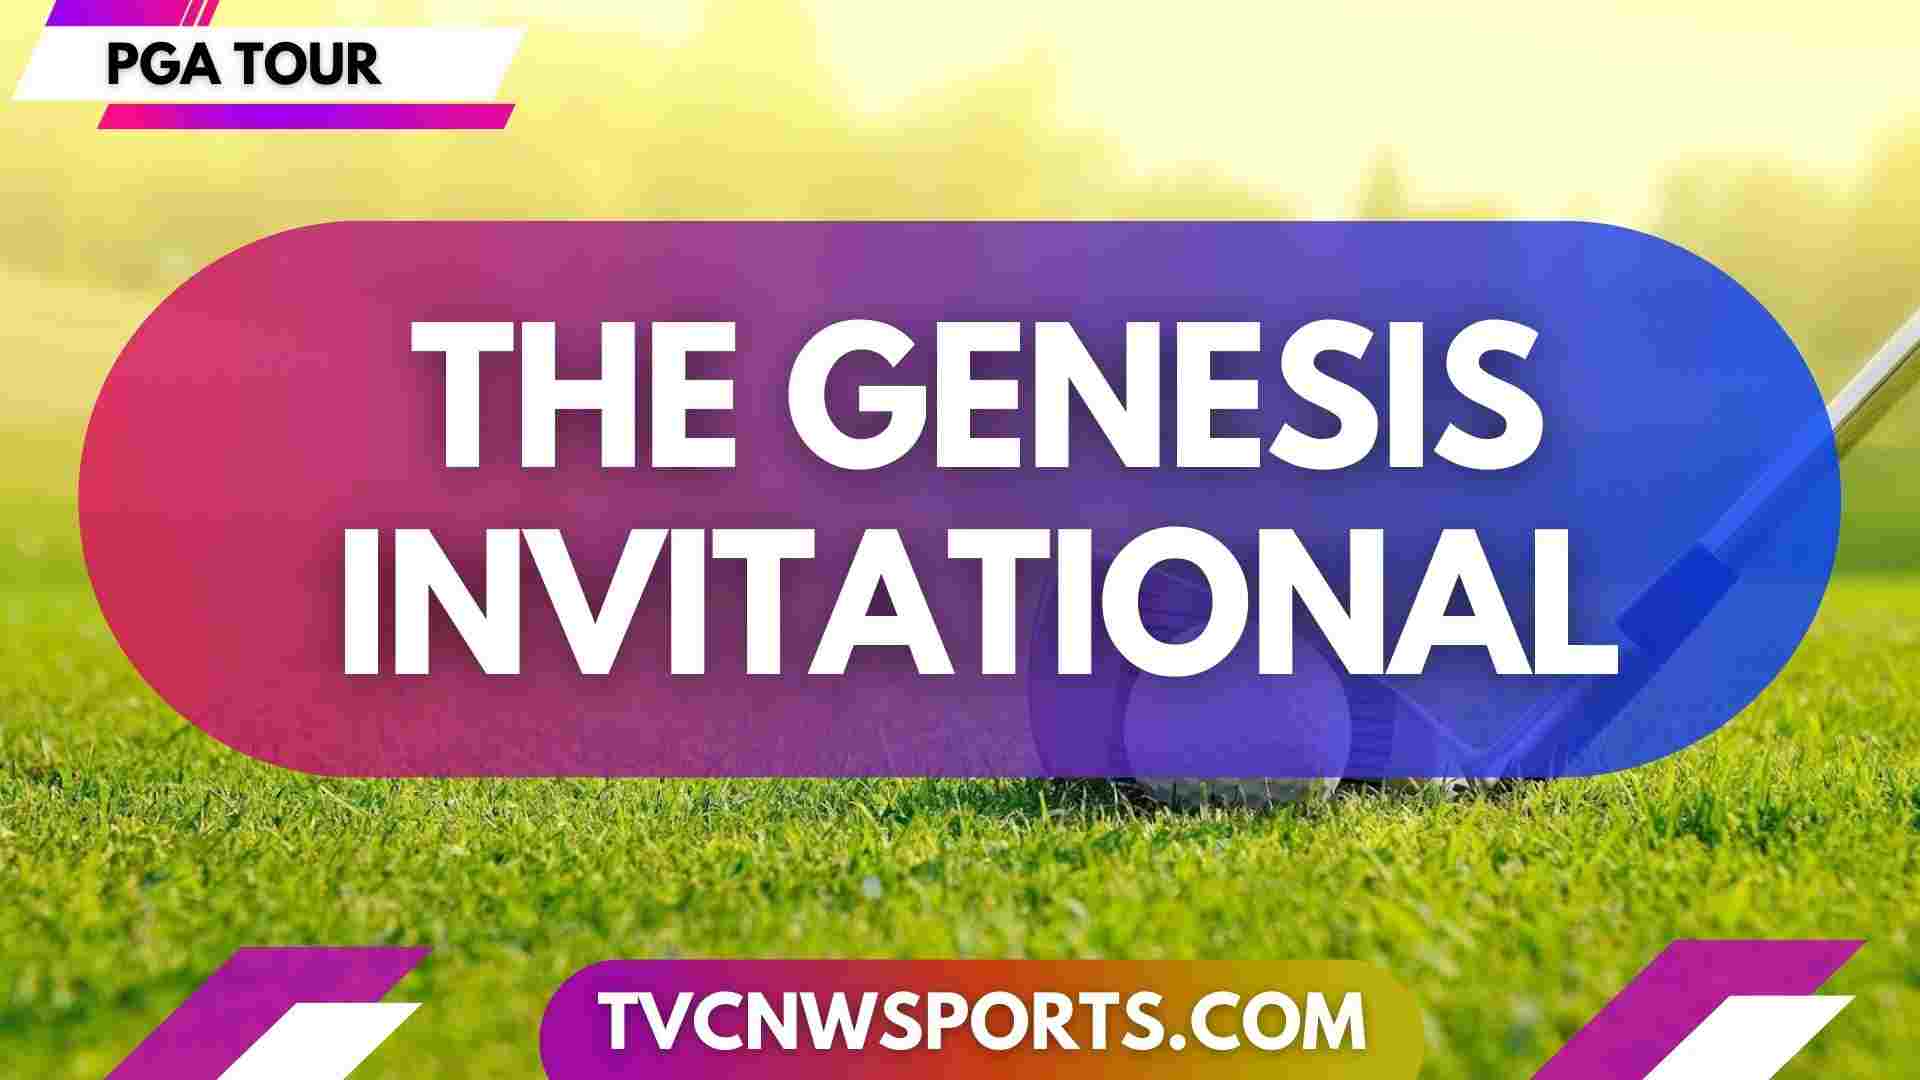 The Genesis Invitational PGA Tour